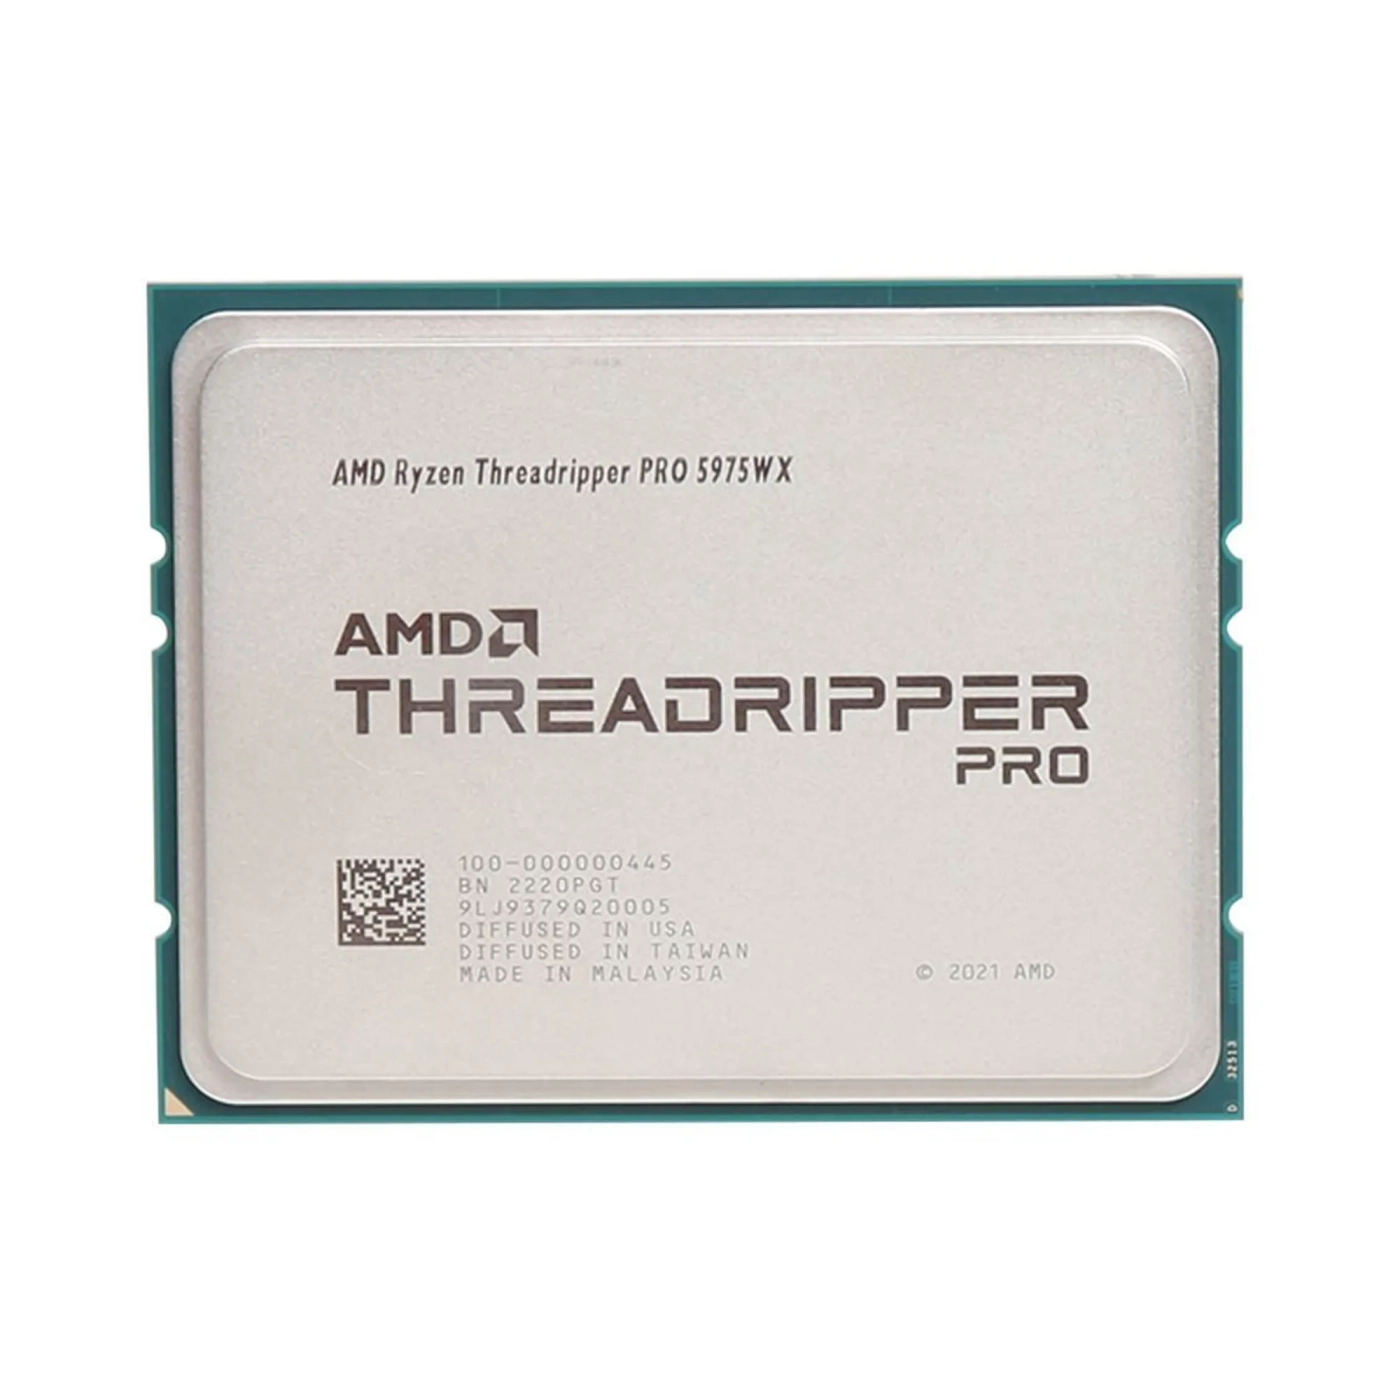 Купить Процессор AMD Ryzen Threadripper PRO 5975WX Tray (100-000000445) - фото 1